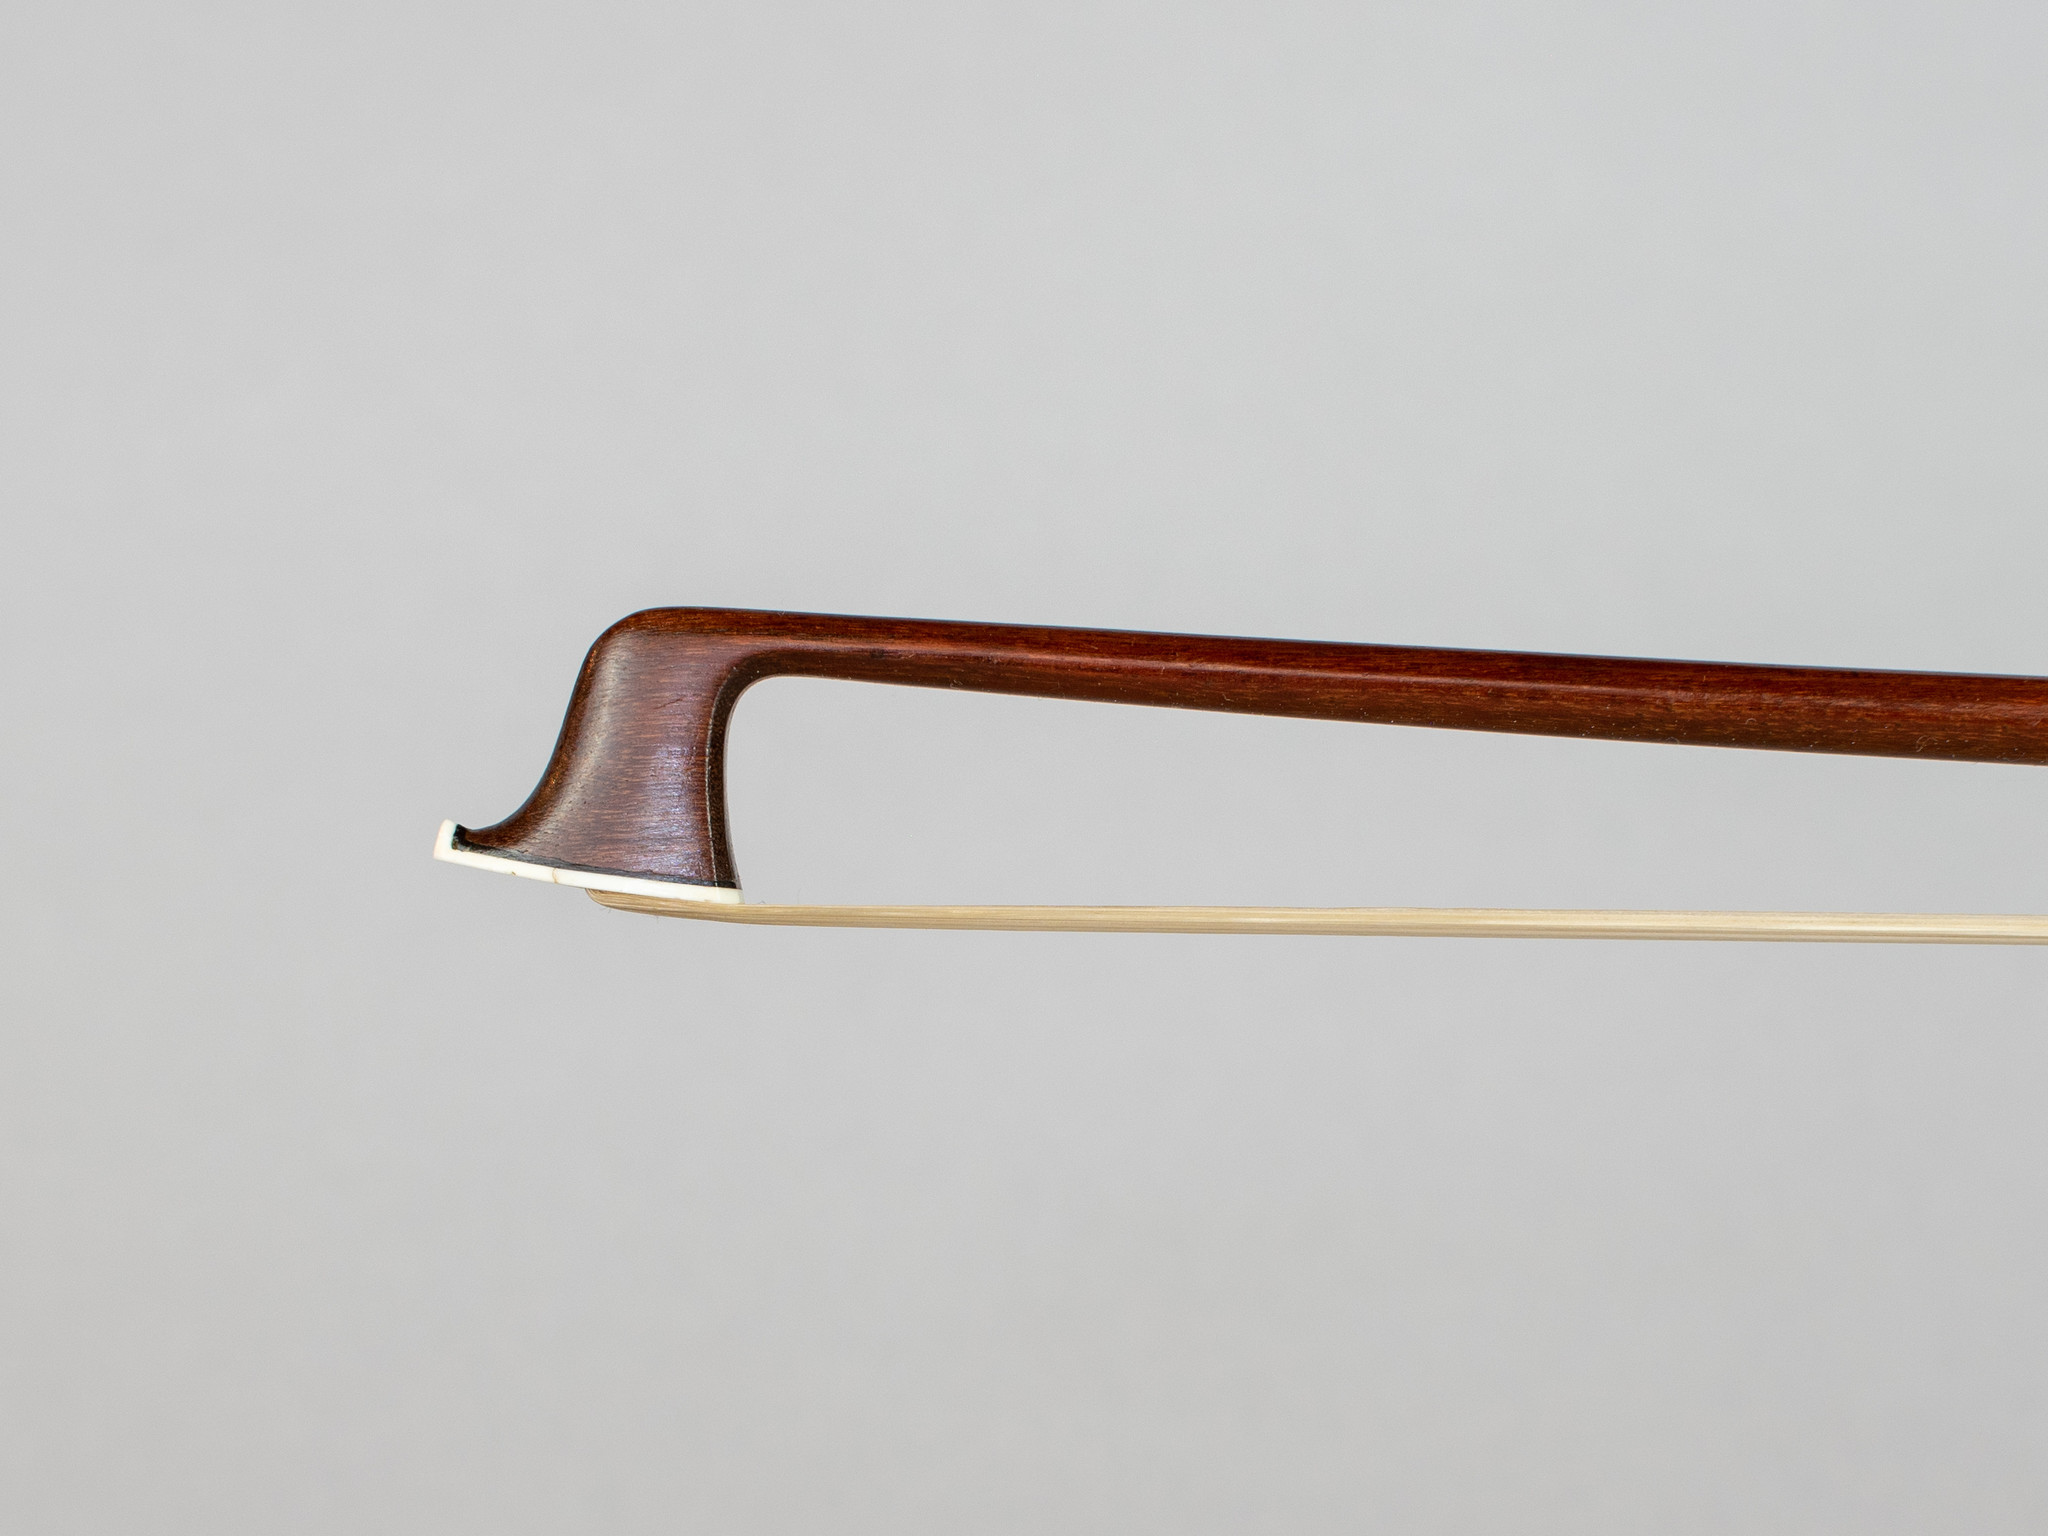 H.R. PFRETZSCHNER gold bow, ca 1900, GERMANY - Metzler Violin Shop